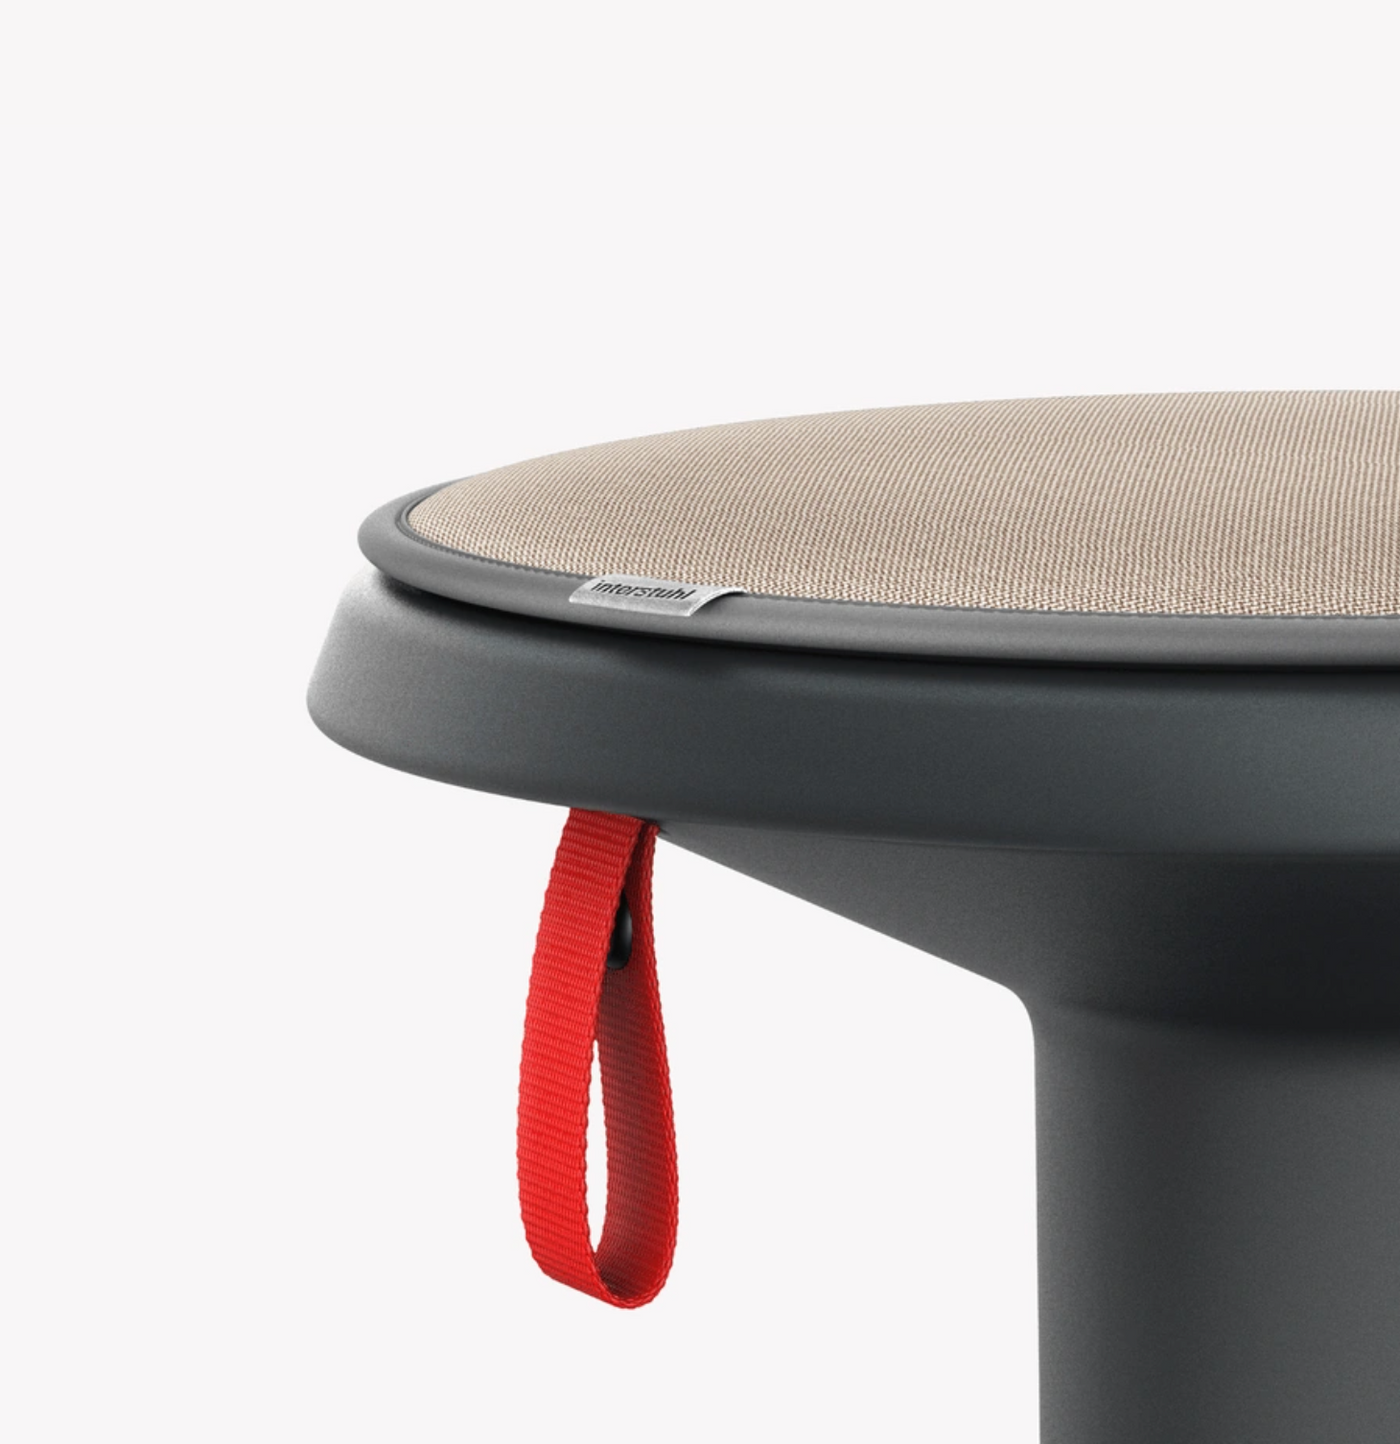 UP design stool